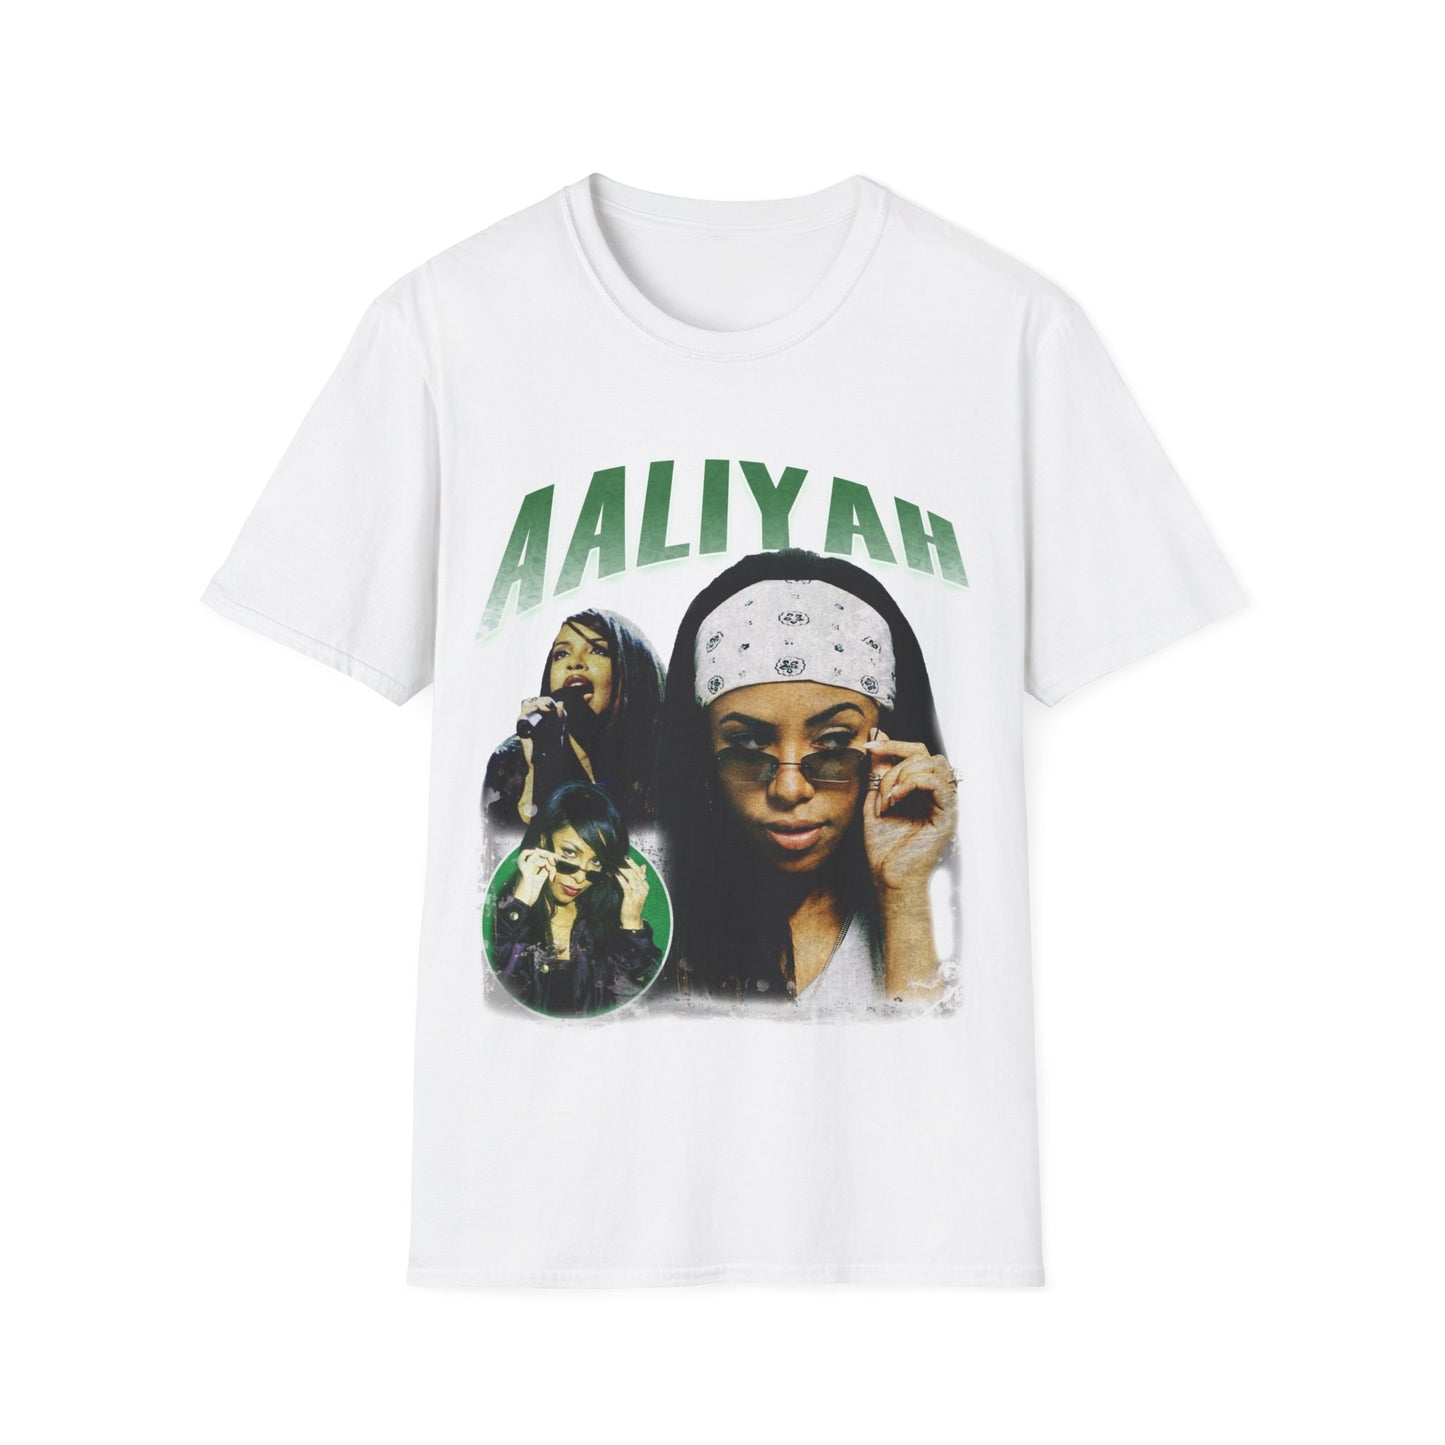 Vintage Aaliyah Shirt!